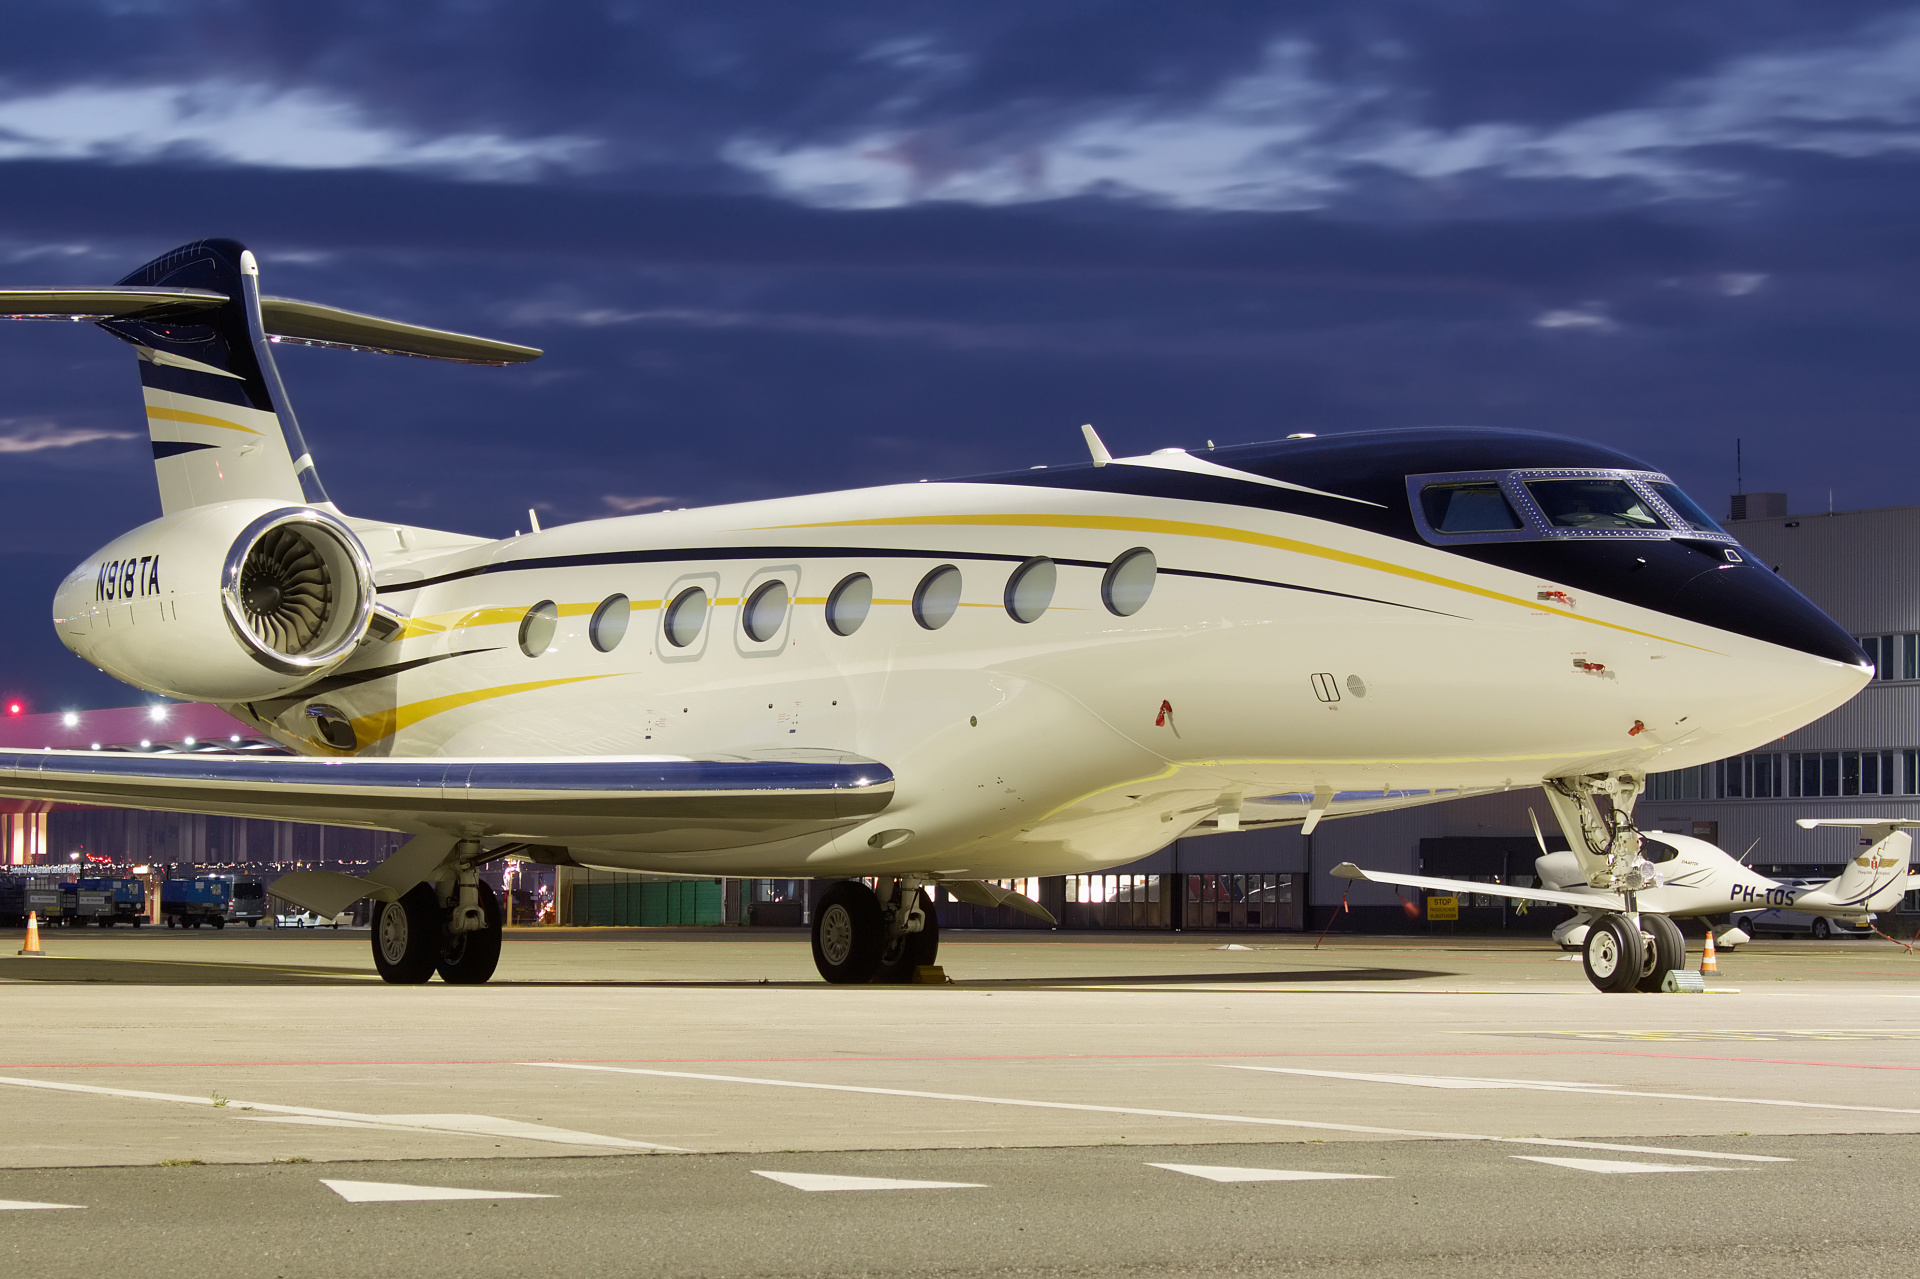 N918TA, Executive Logistics Solutions (Aircraft » Schiphol Spotting » Gulfstream G650)